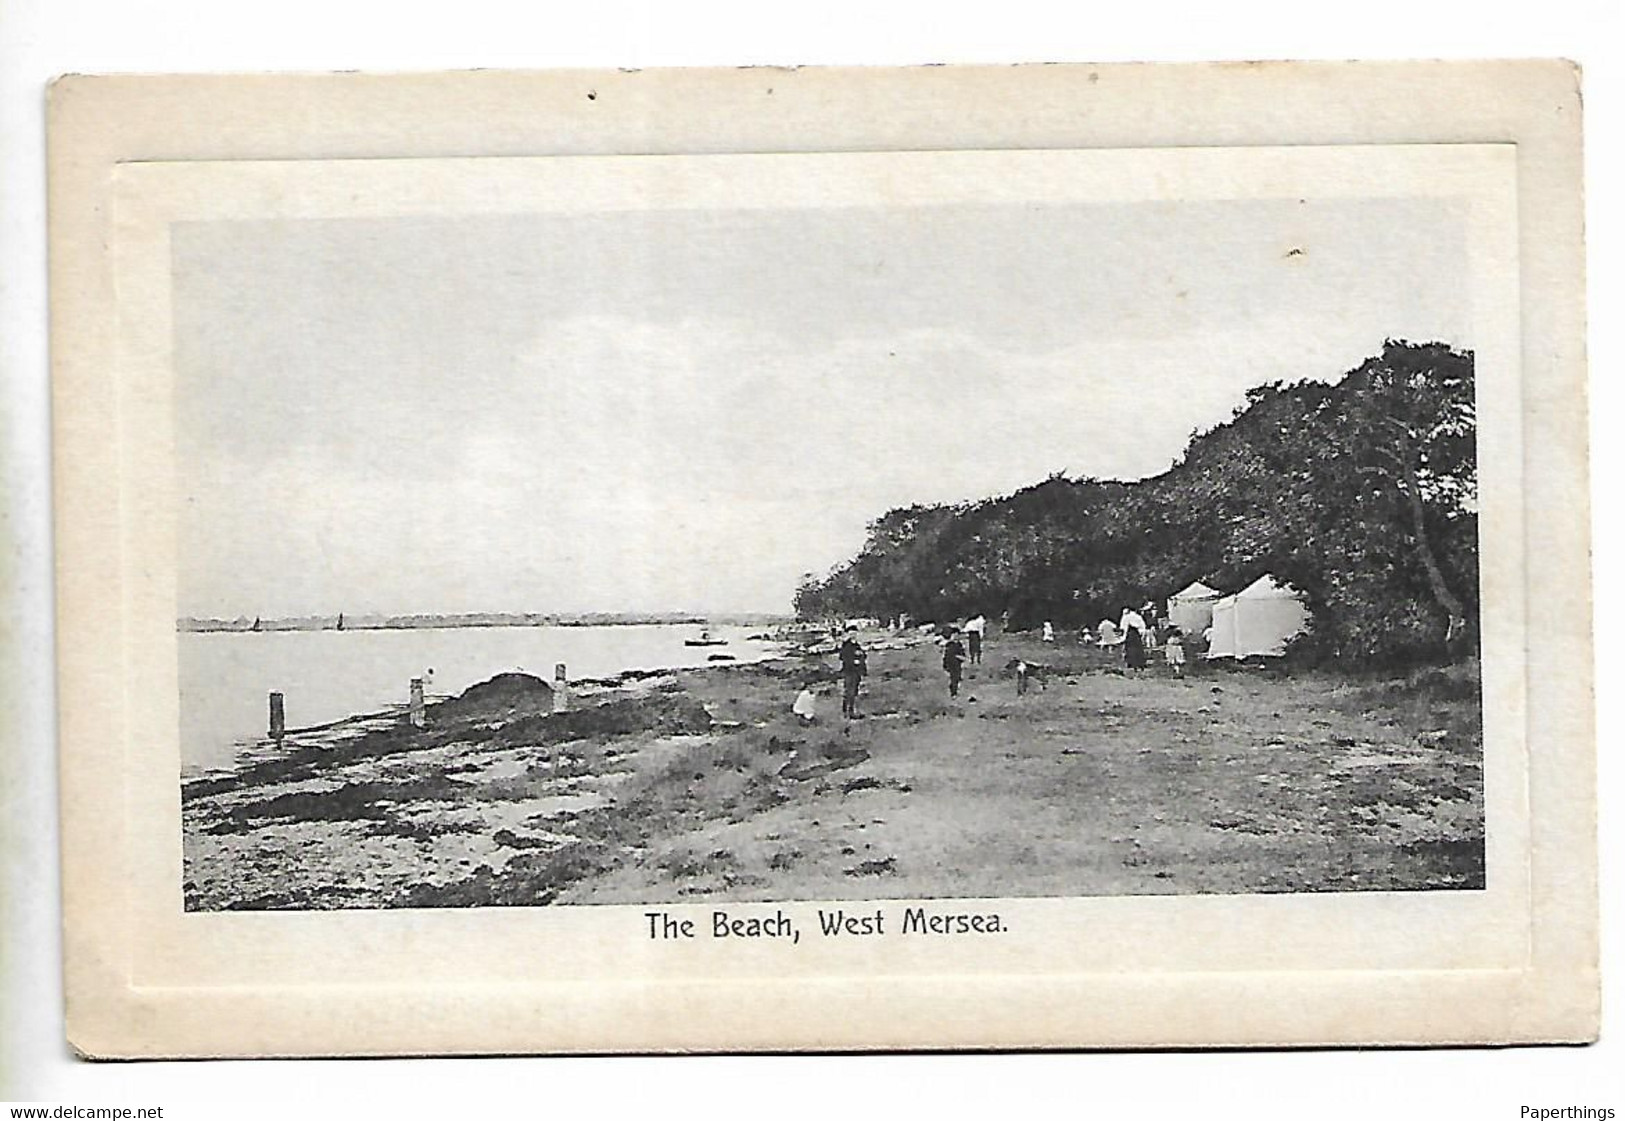 Early Postcard, West Mersea Beach, Tents, People, Landscape, Coastline, 1915. - Colchester